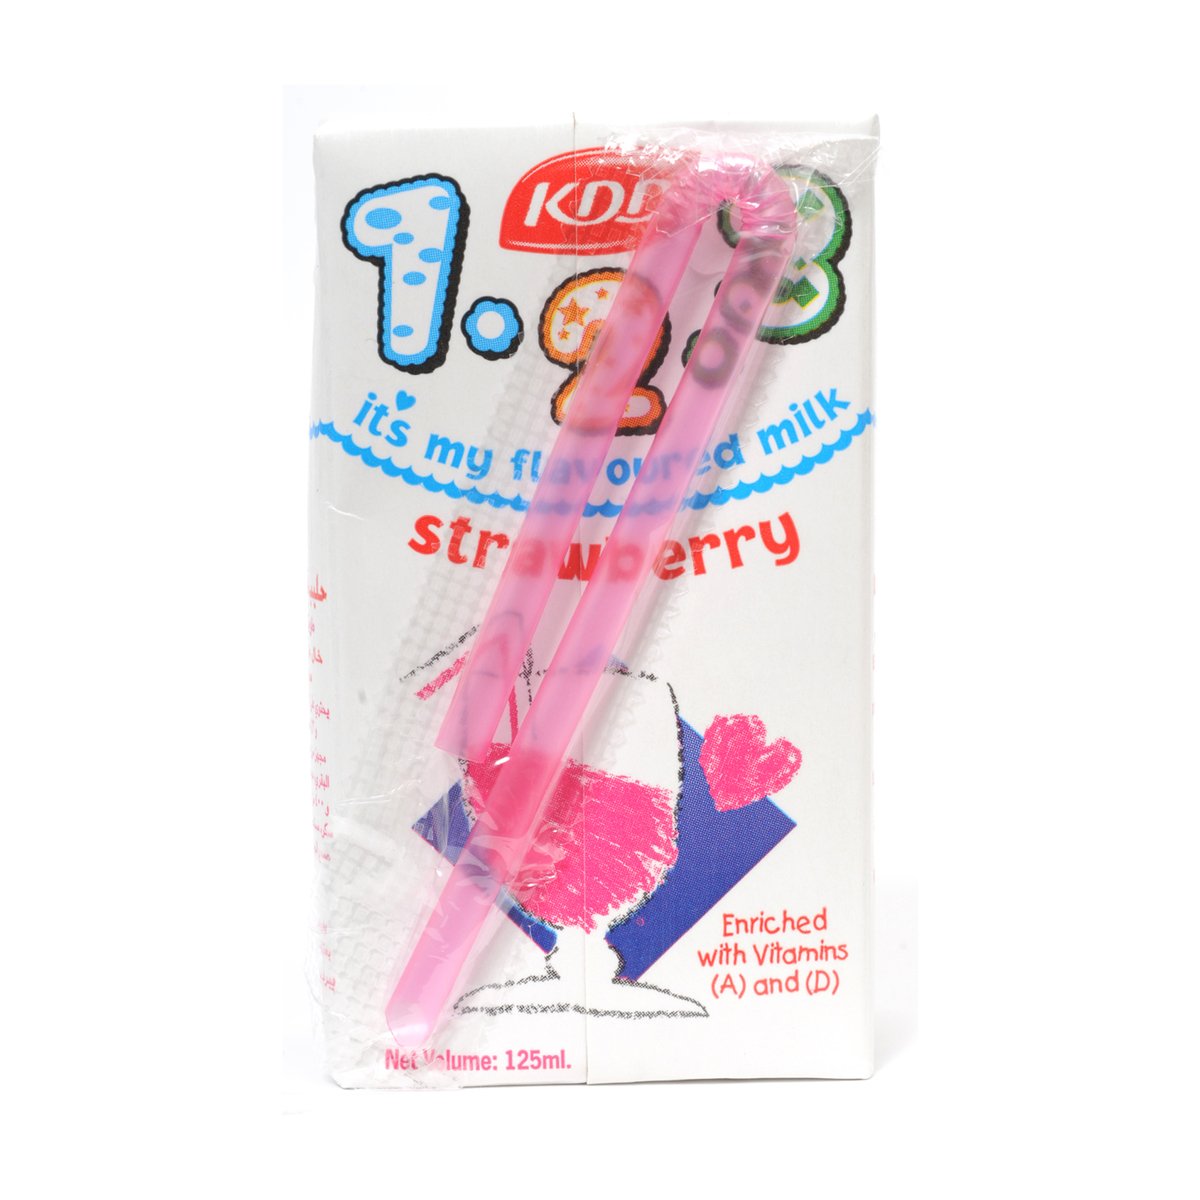 KDD 1-2-3 Strawberry Milk Long Life Low Fat 6 x 125 ml